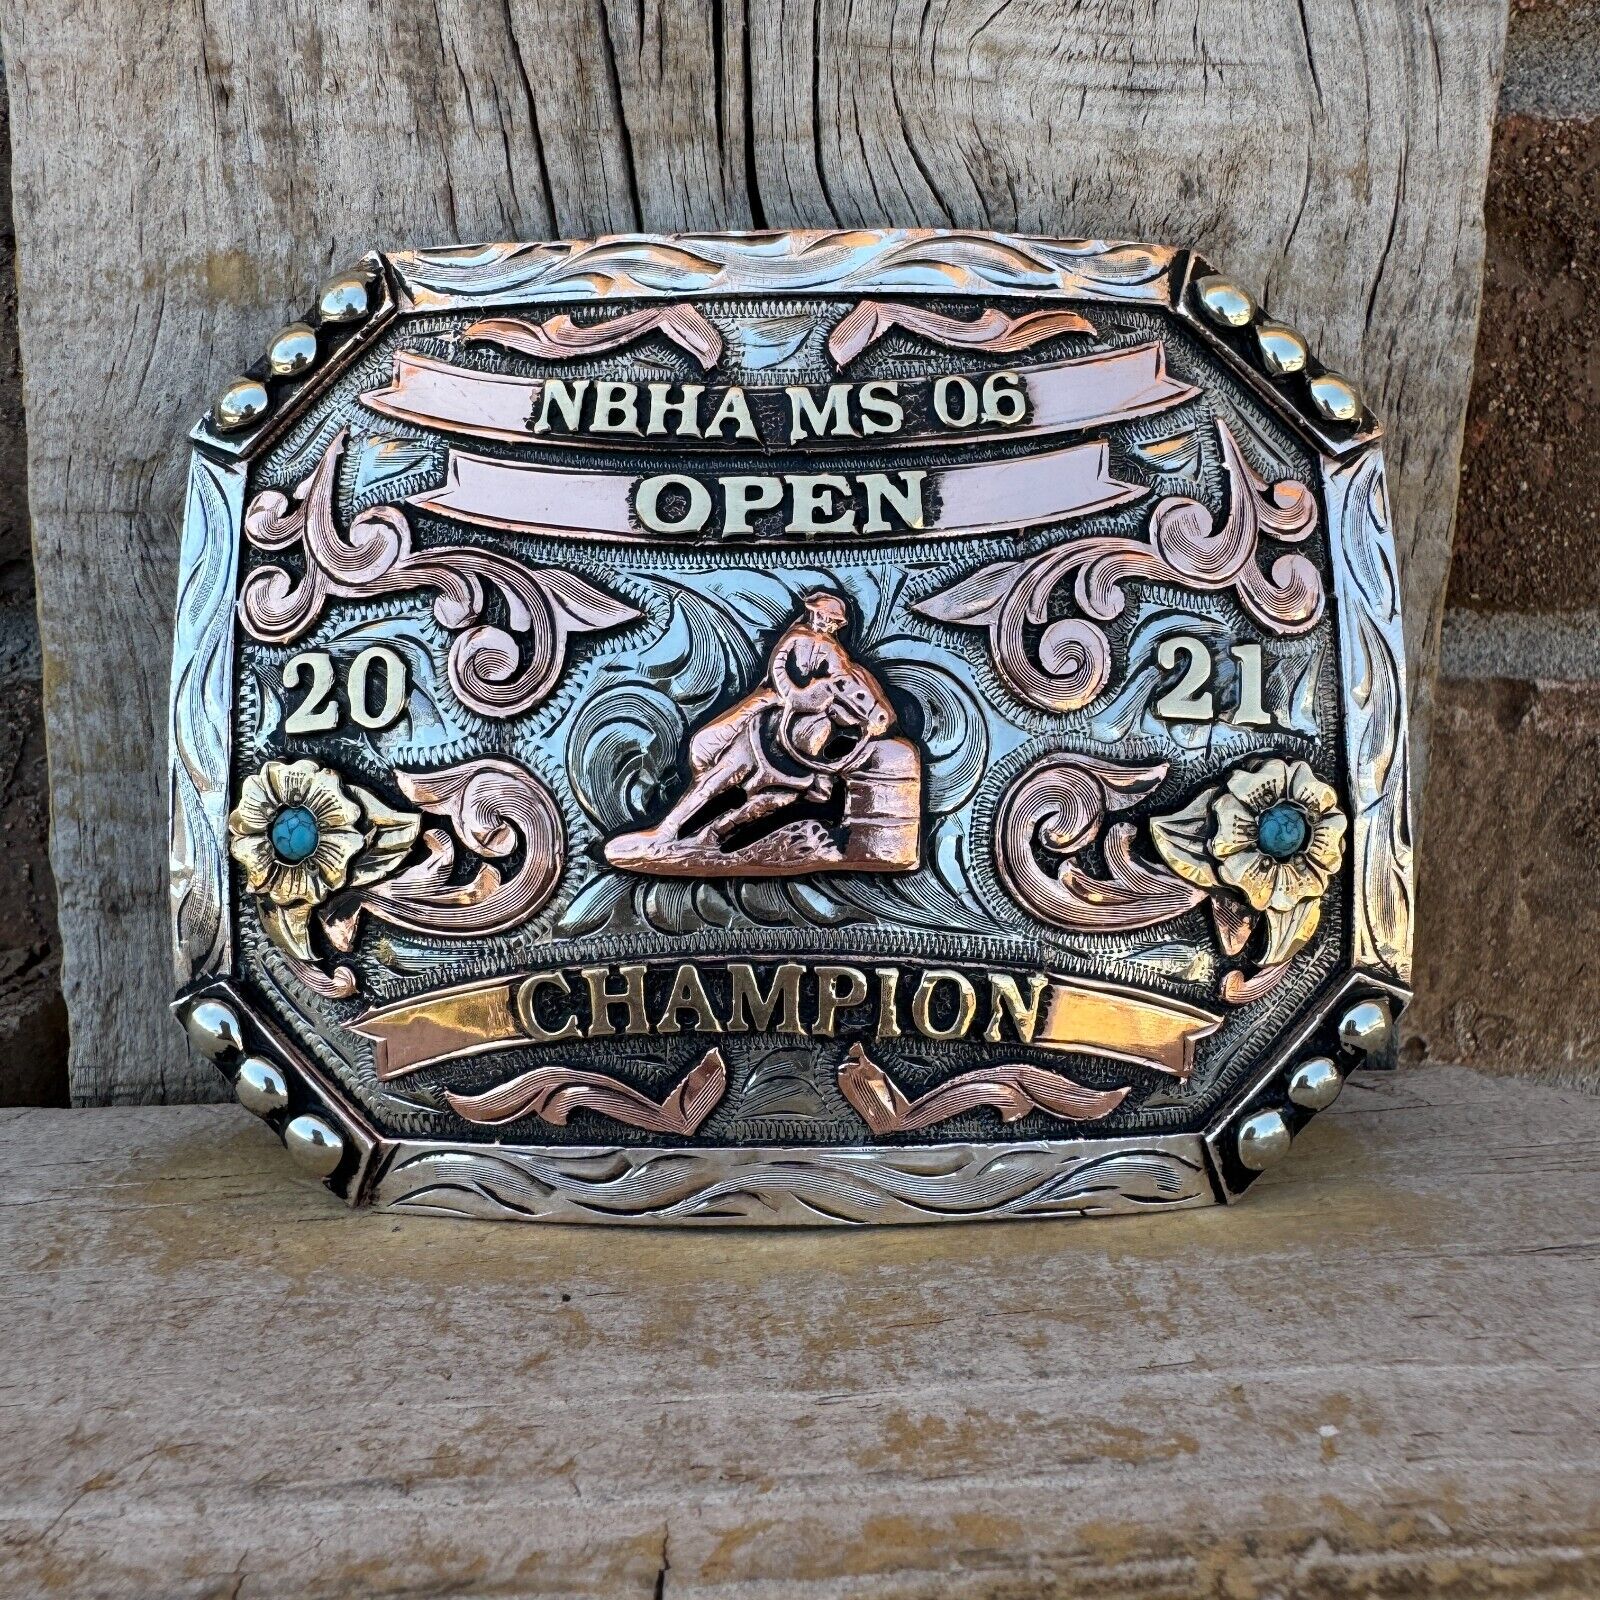 Trophy Rodeo Champion Belt Buckle Barrel Racing Racer Open Champion